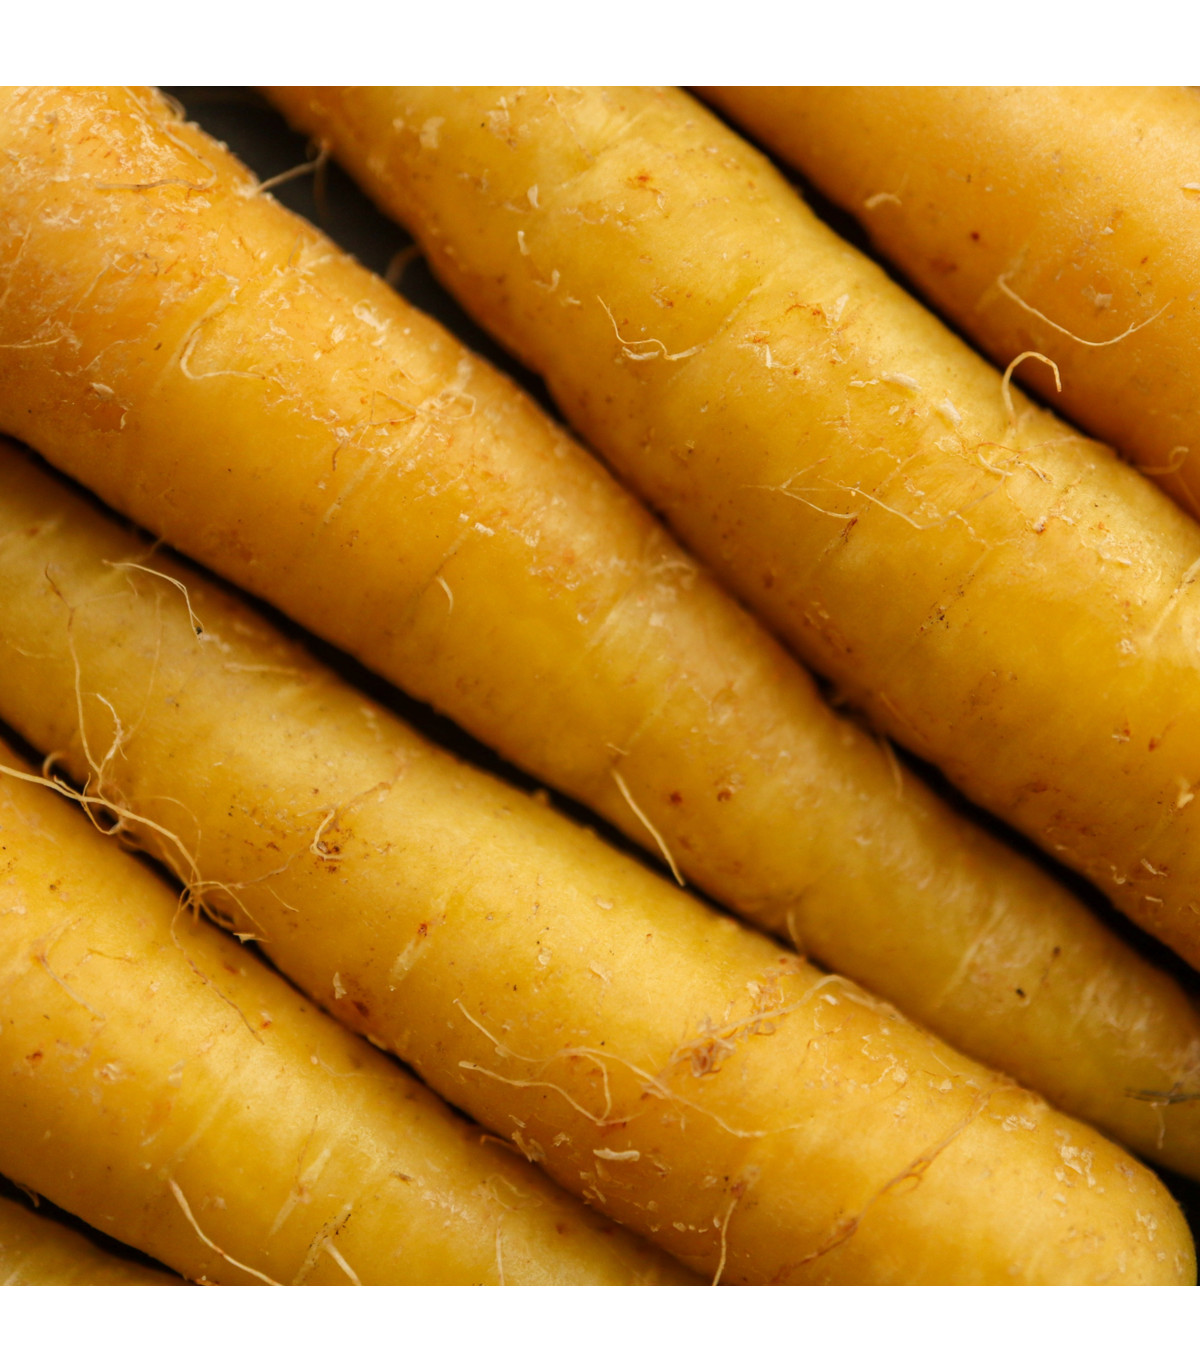 Mrkev žlutá Jaune du doubs - Daucus carota - prodej semen - 900 ks